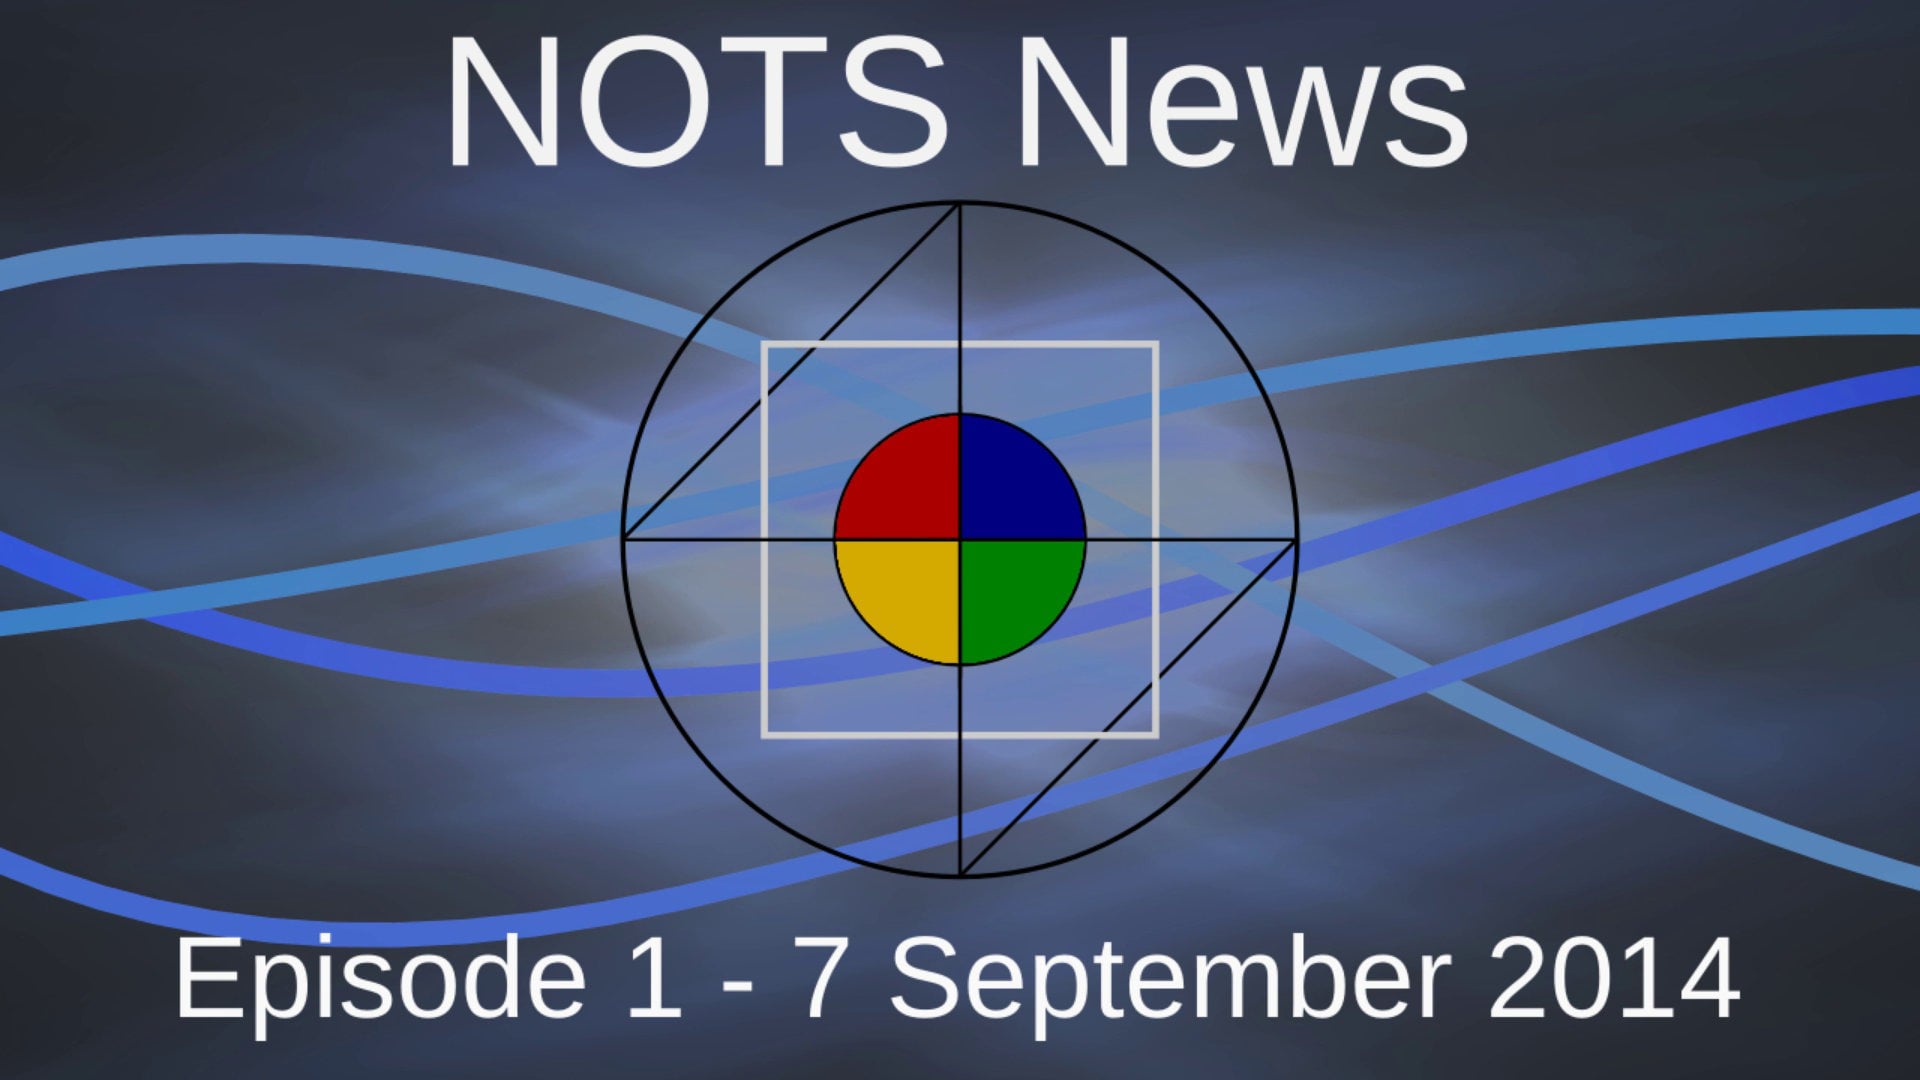 7 September 2014 - NOTS News